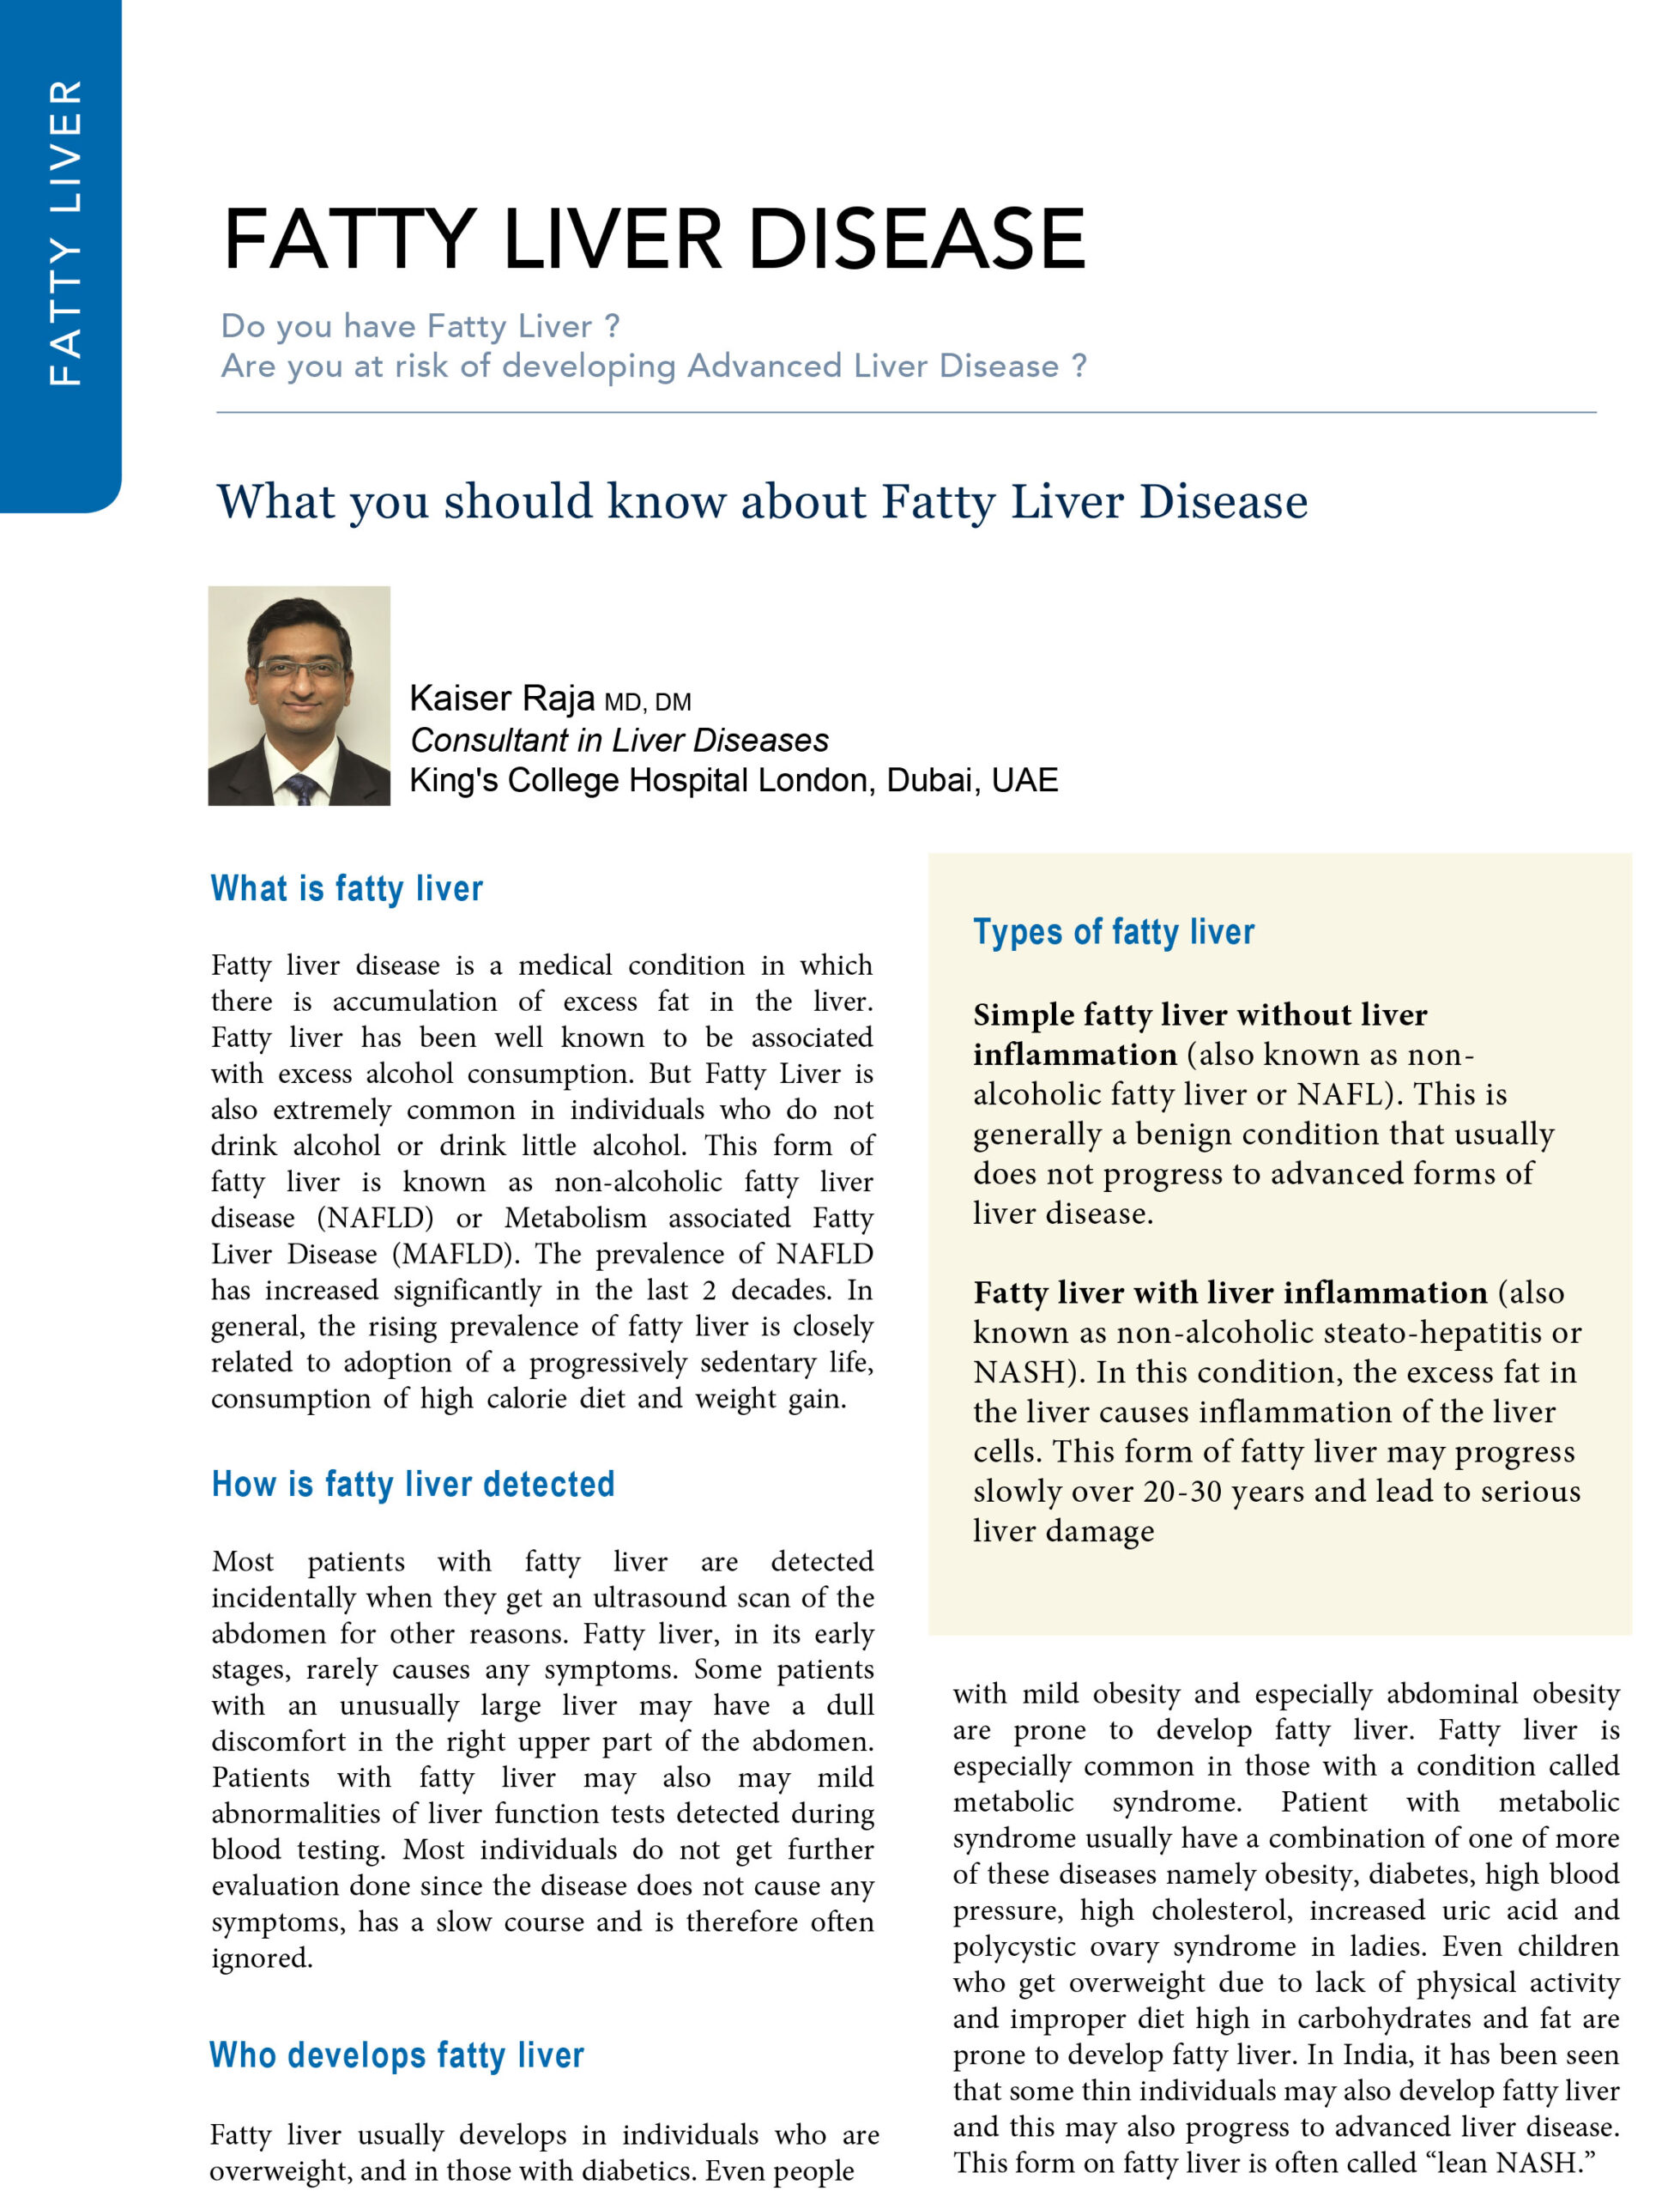 NAFLD Fatty Liver Disease